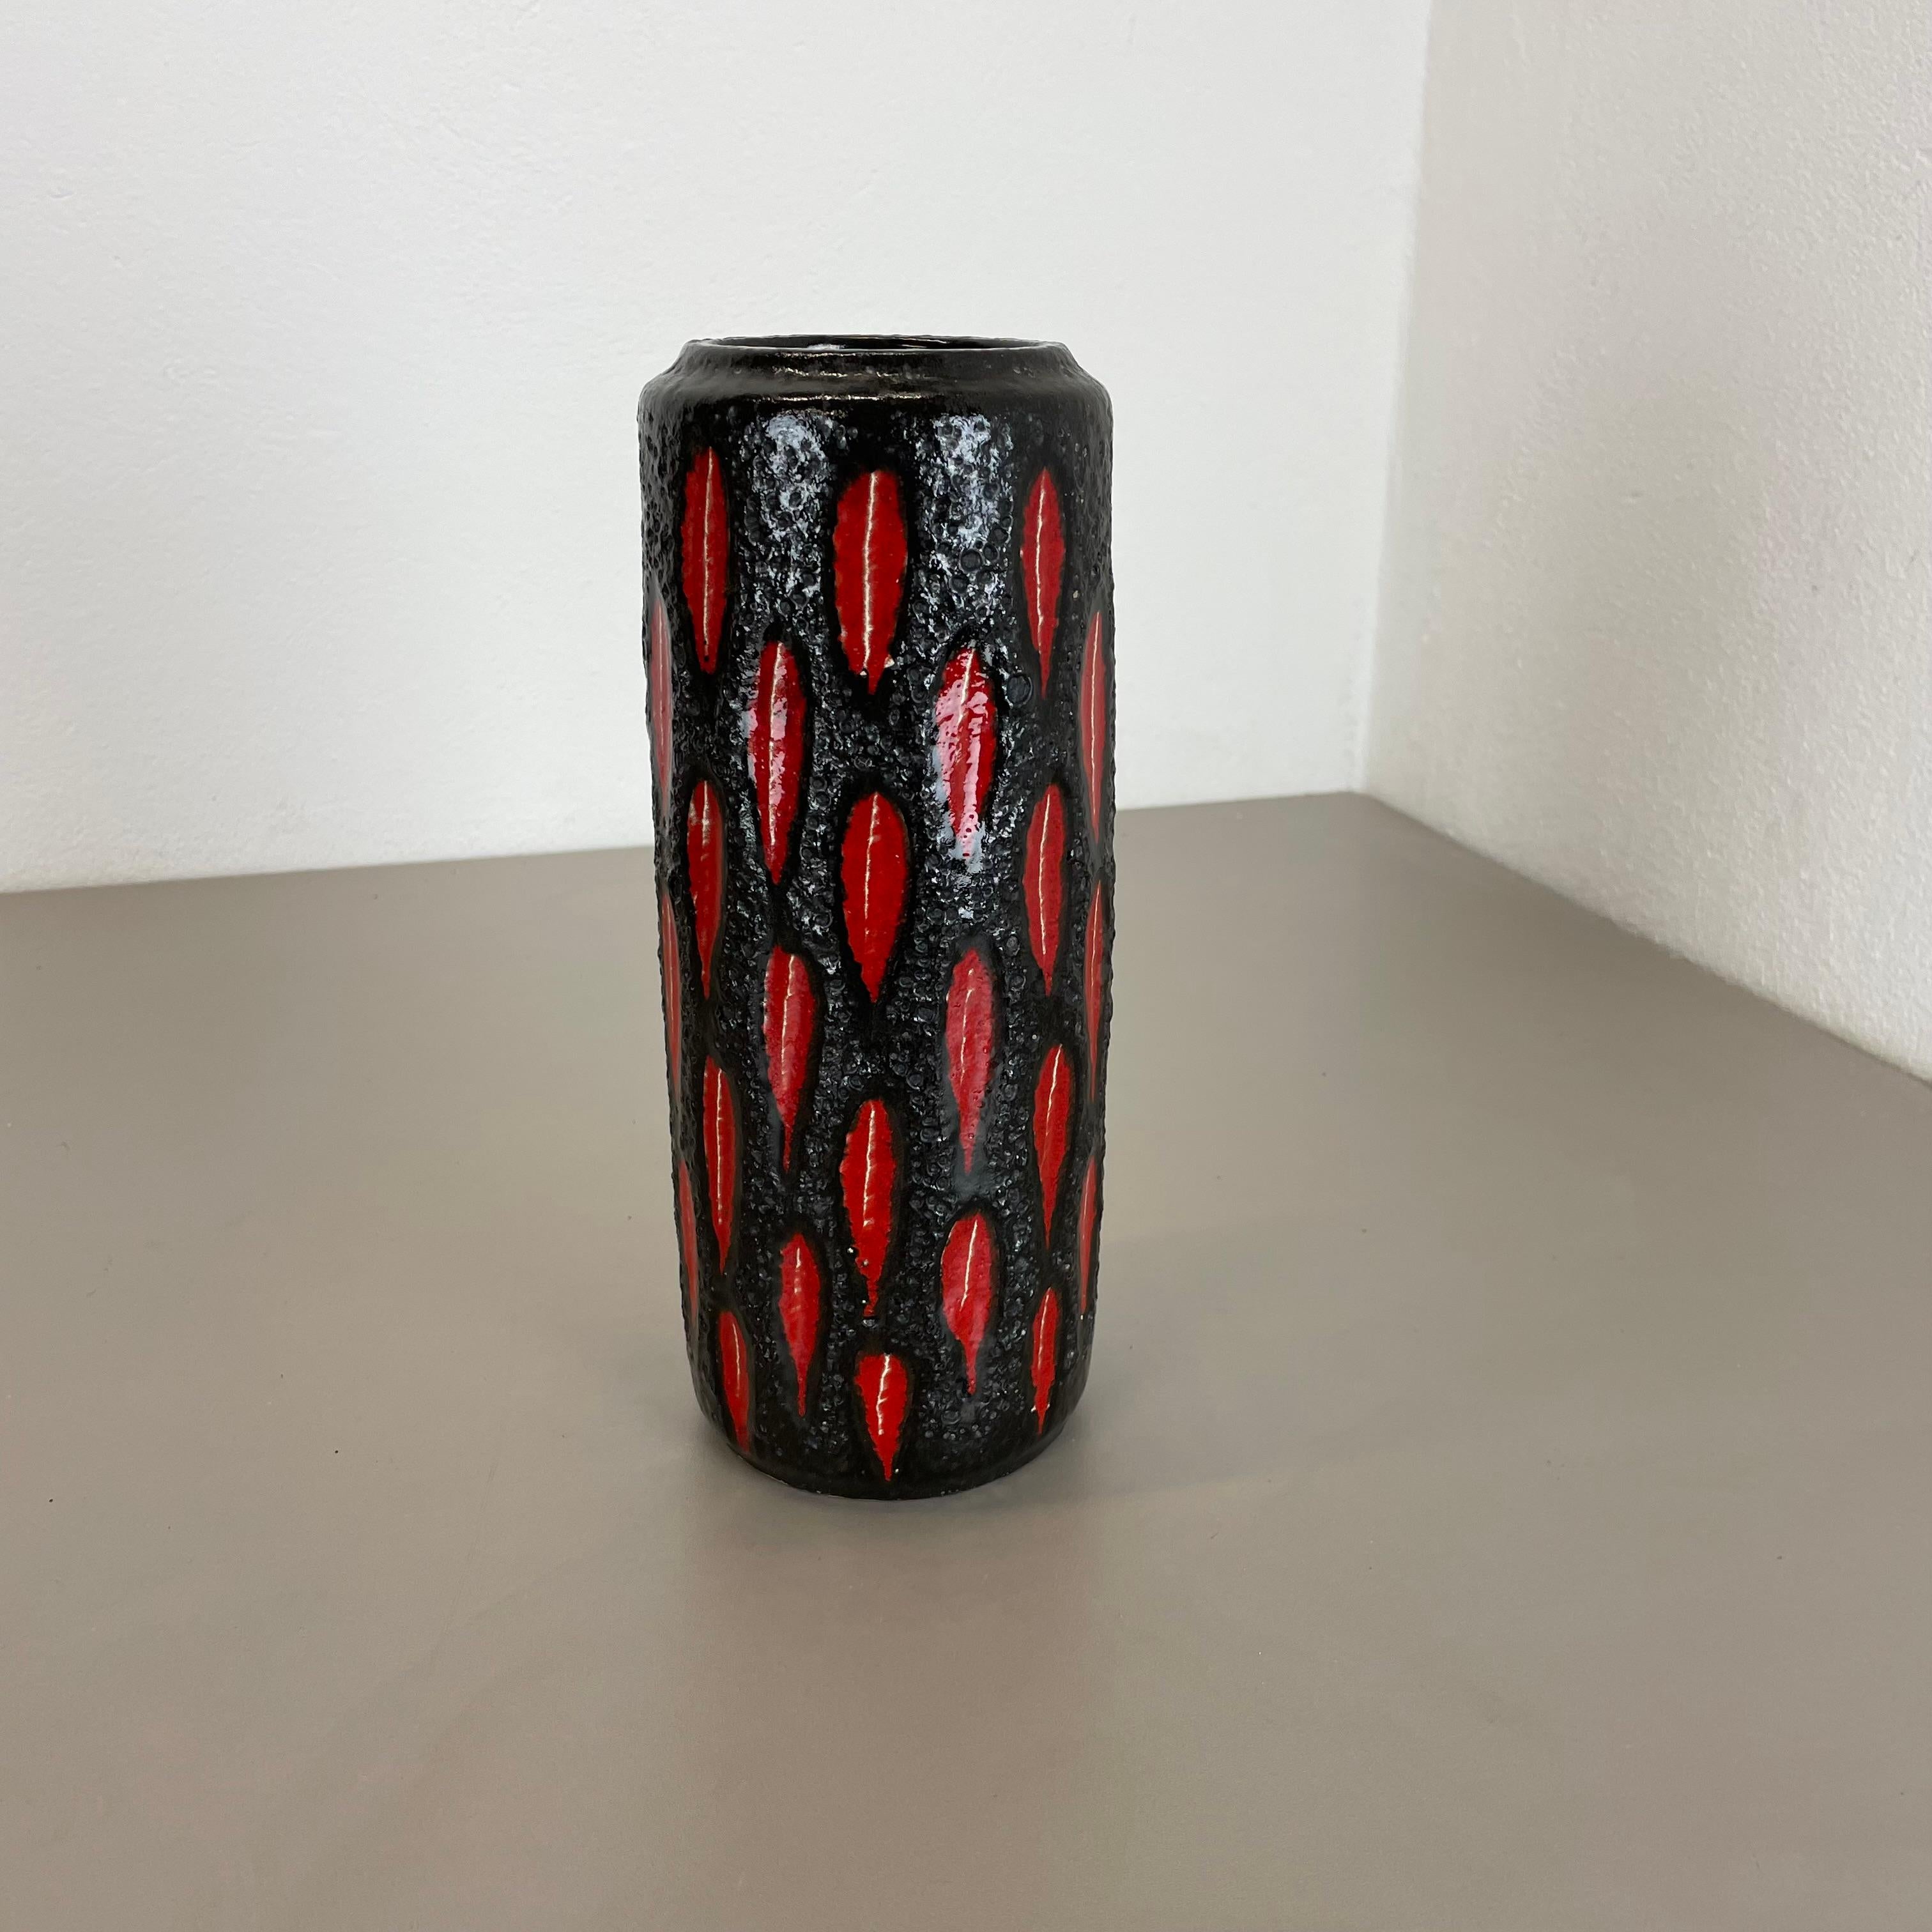 Article:

Fat lava art vase super rare black red 